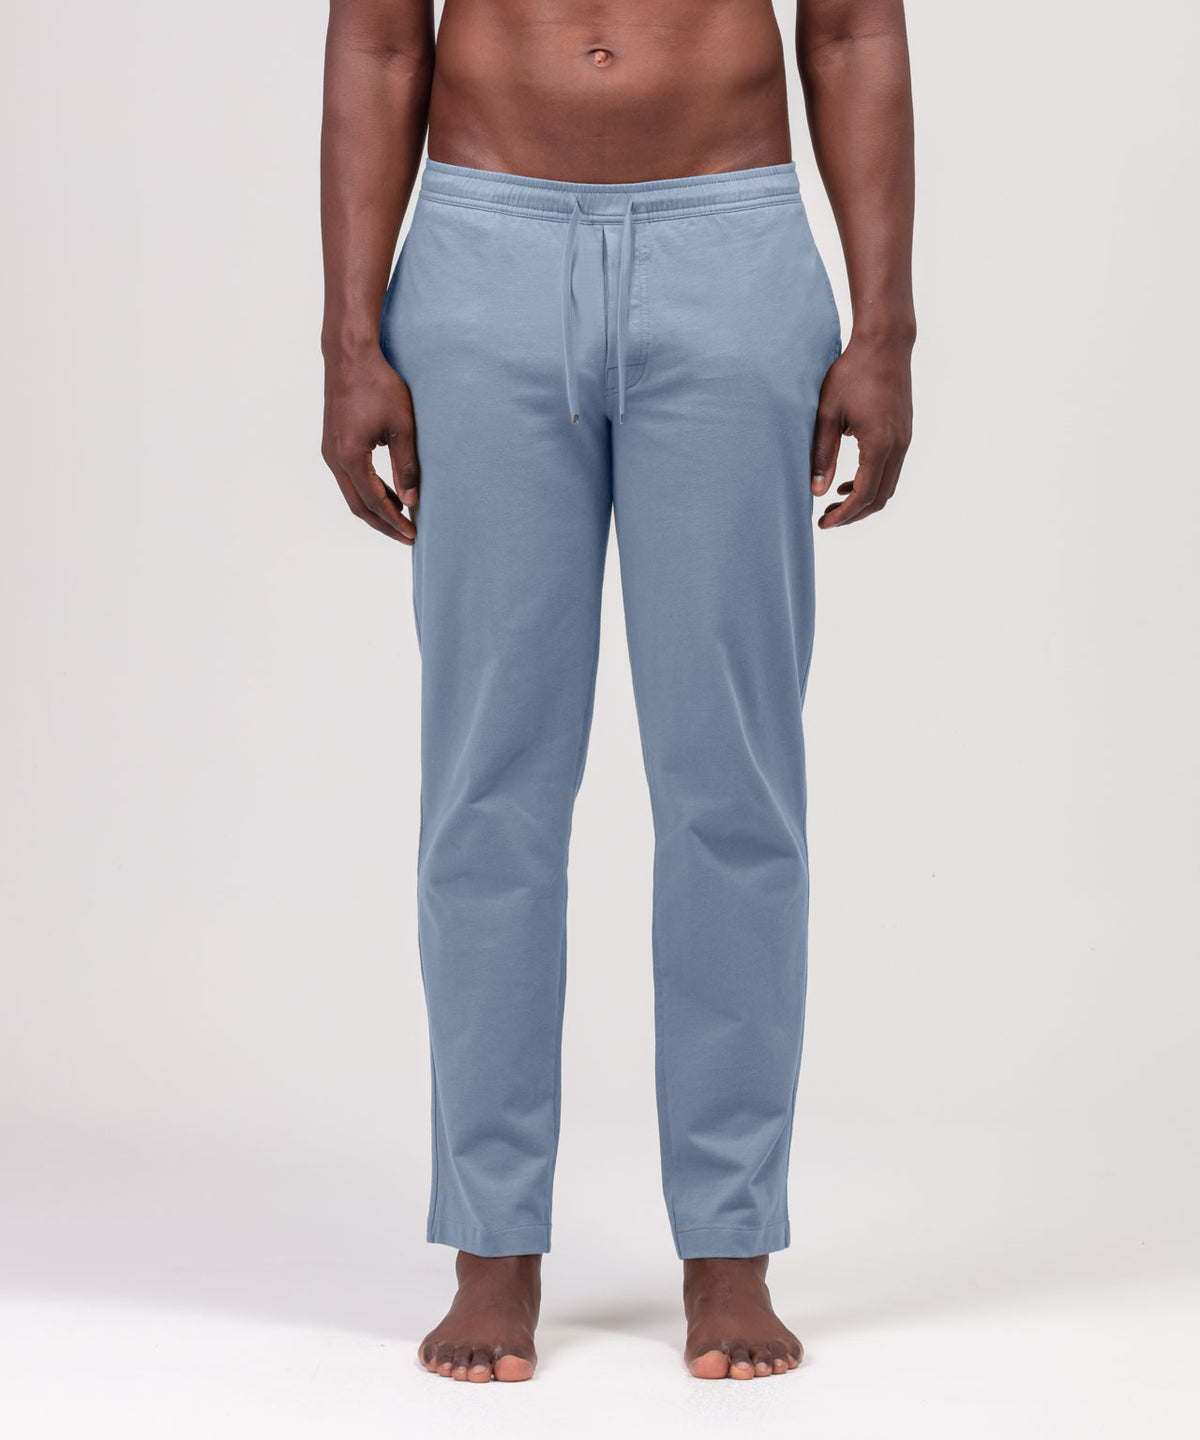 Pantalon à cordon en coton: Bleu clair